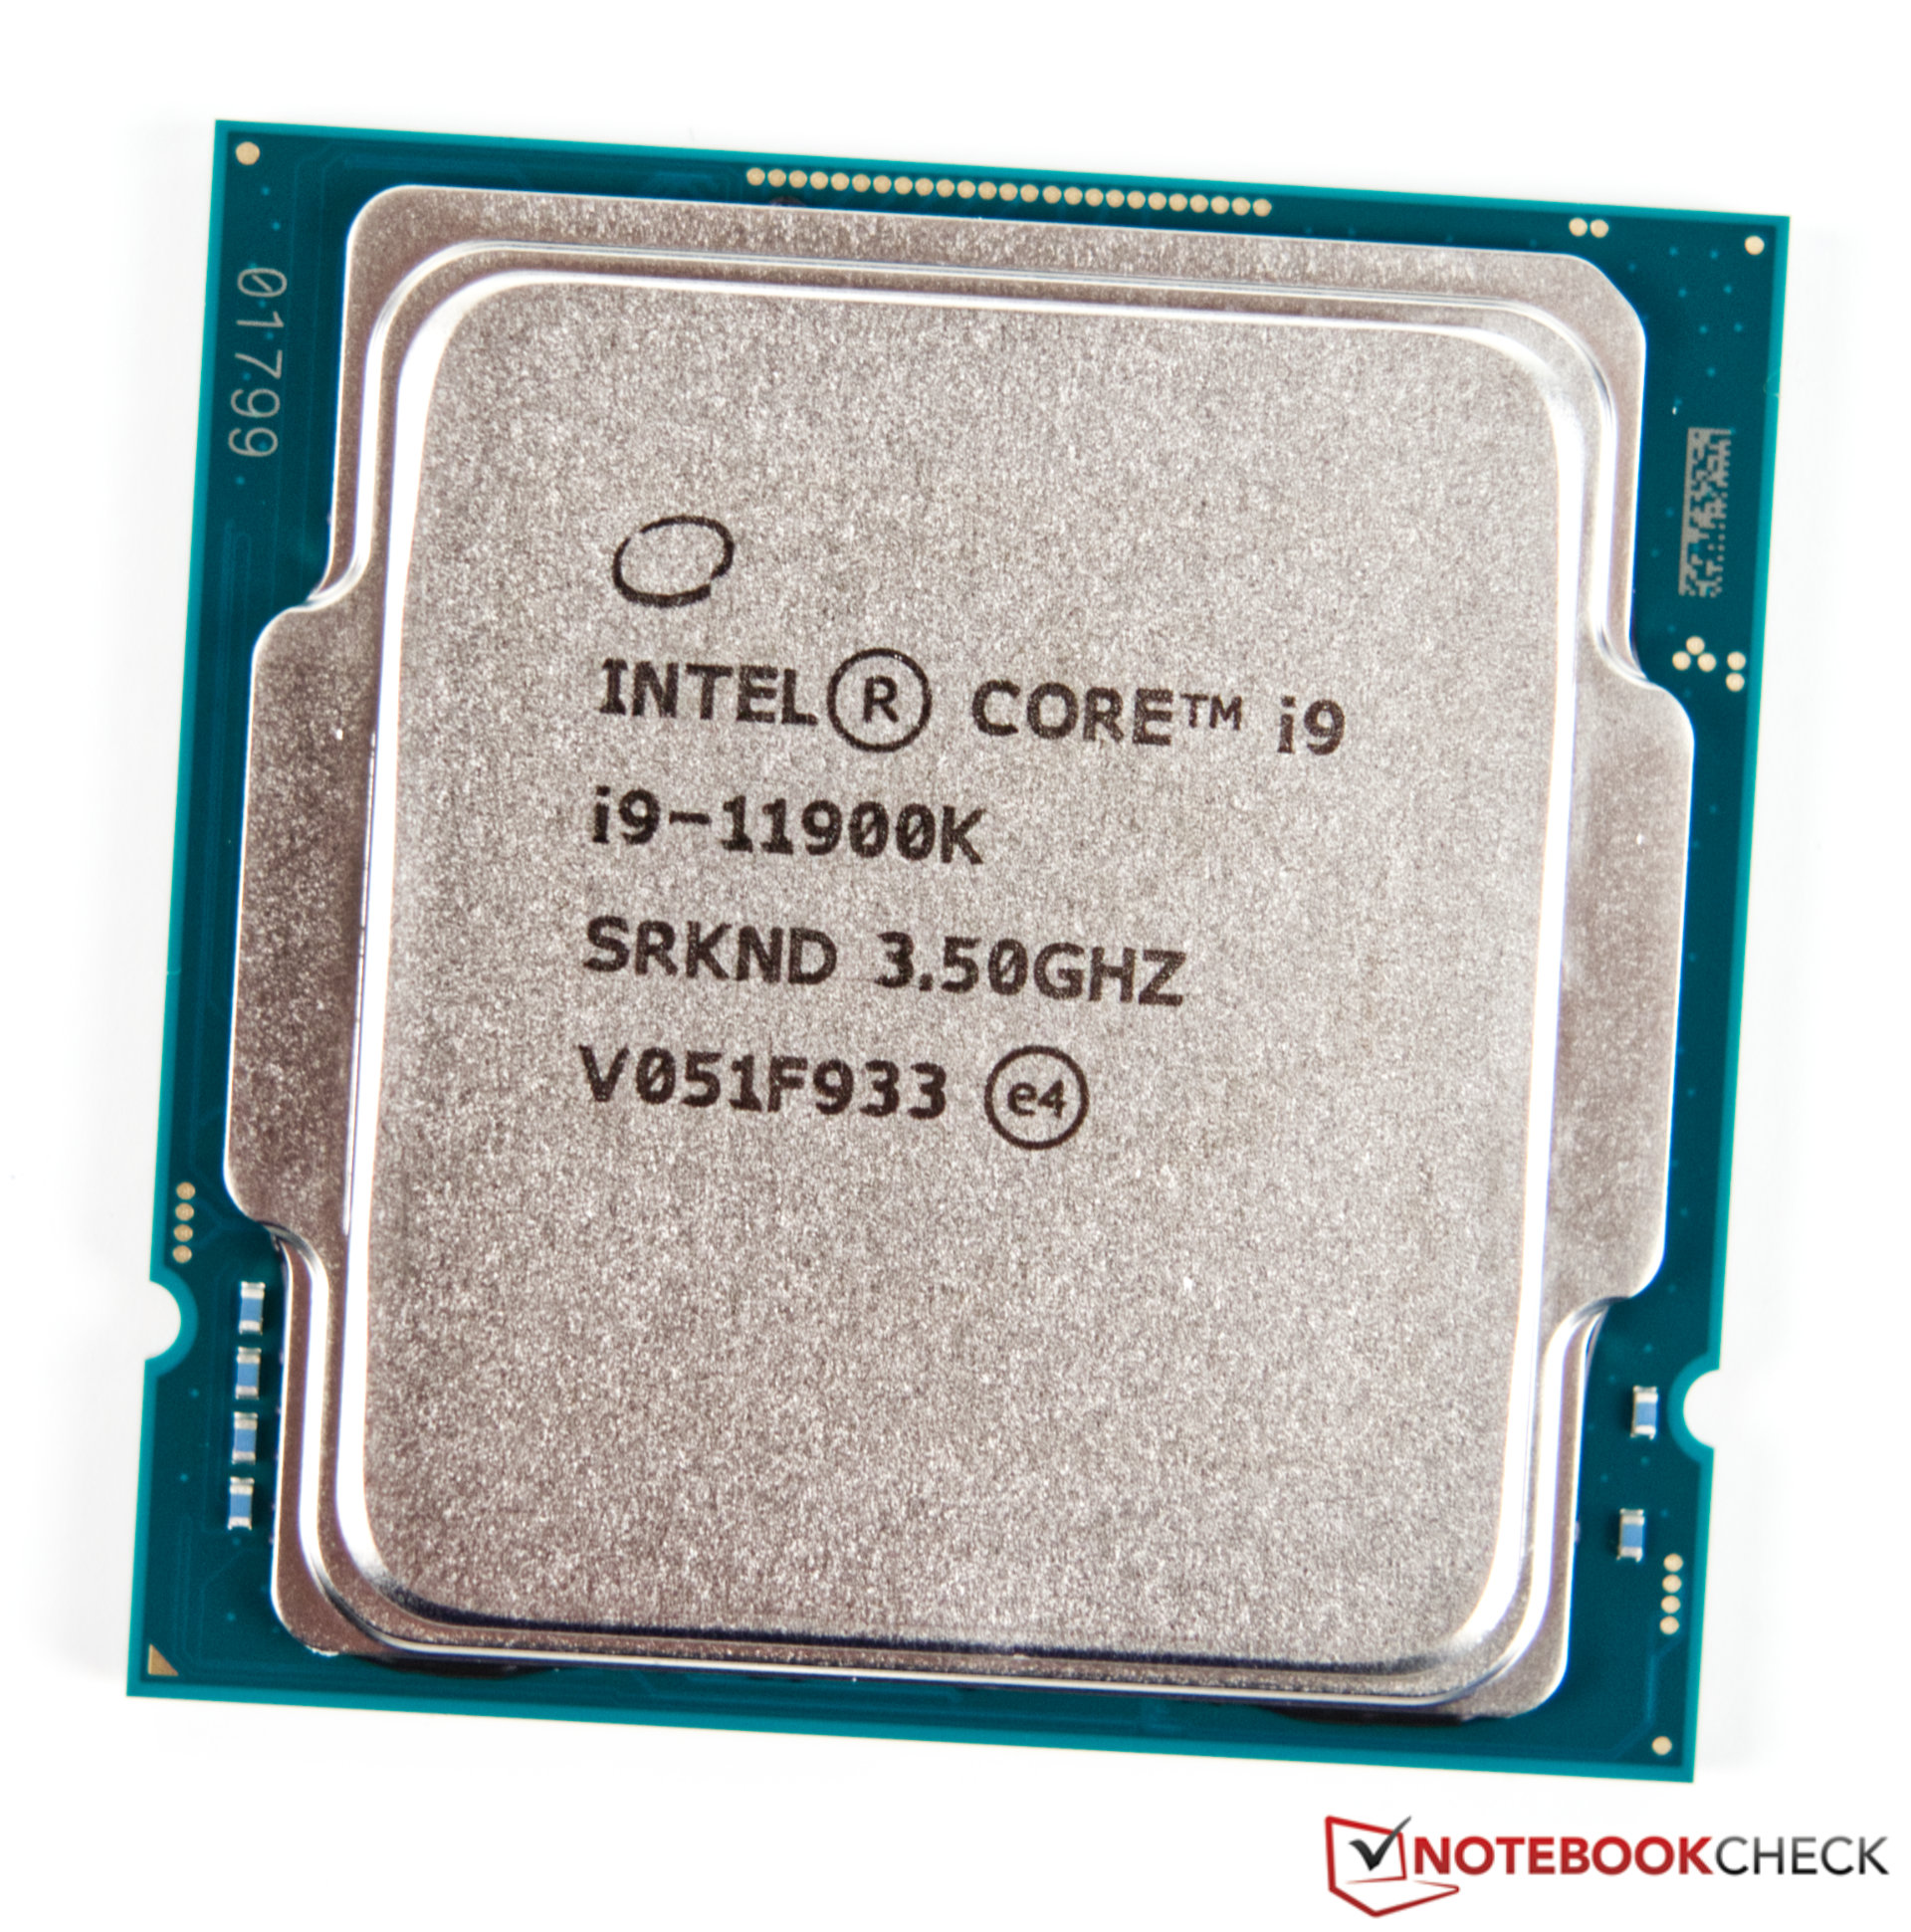 Kostuums wraak moeilijk Intel Core i9-11900K Processor - Benchmarks and Specs - NotebookCheck.net  Tech